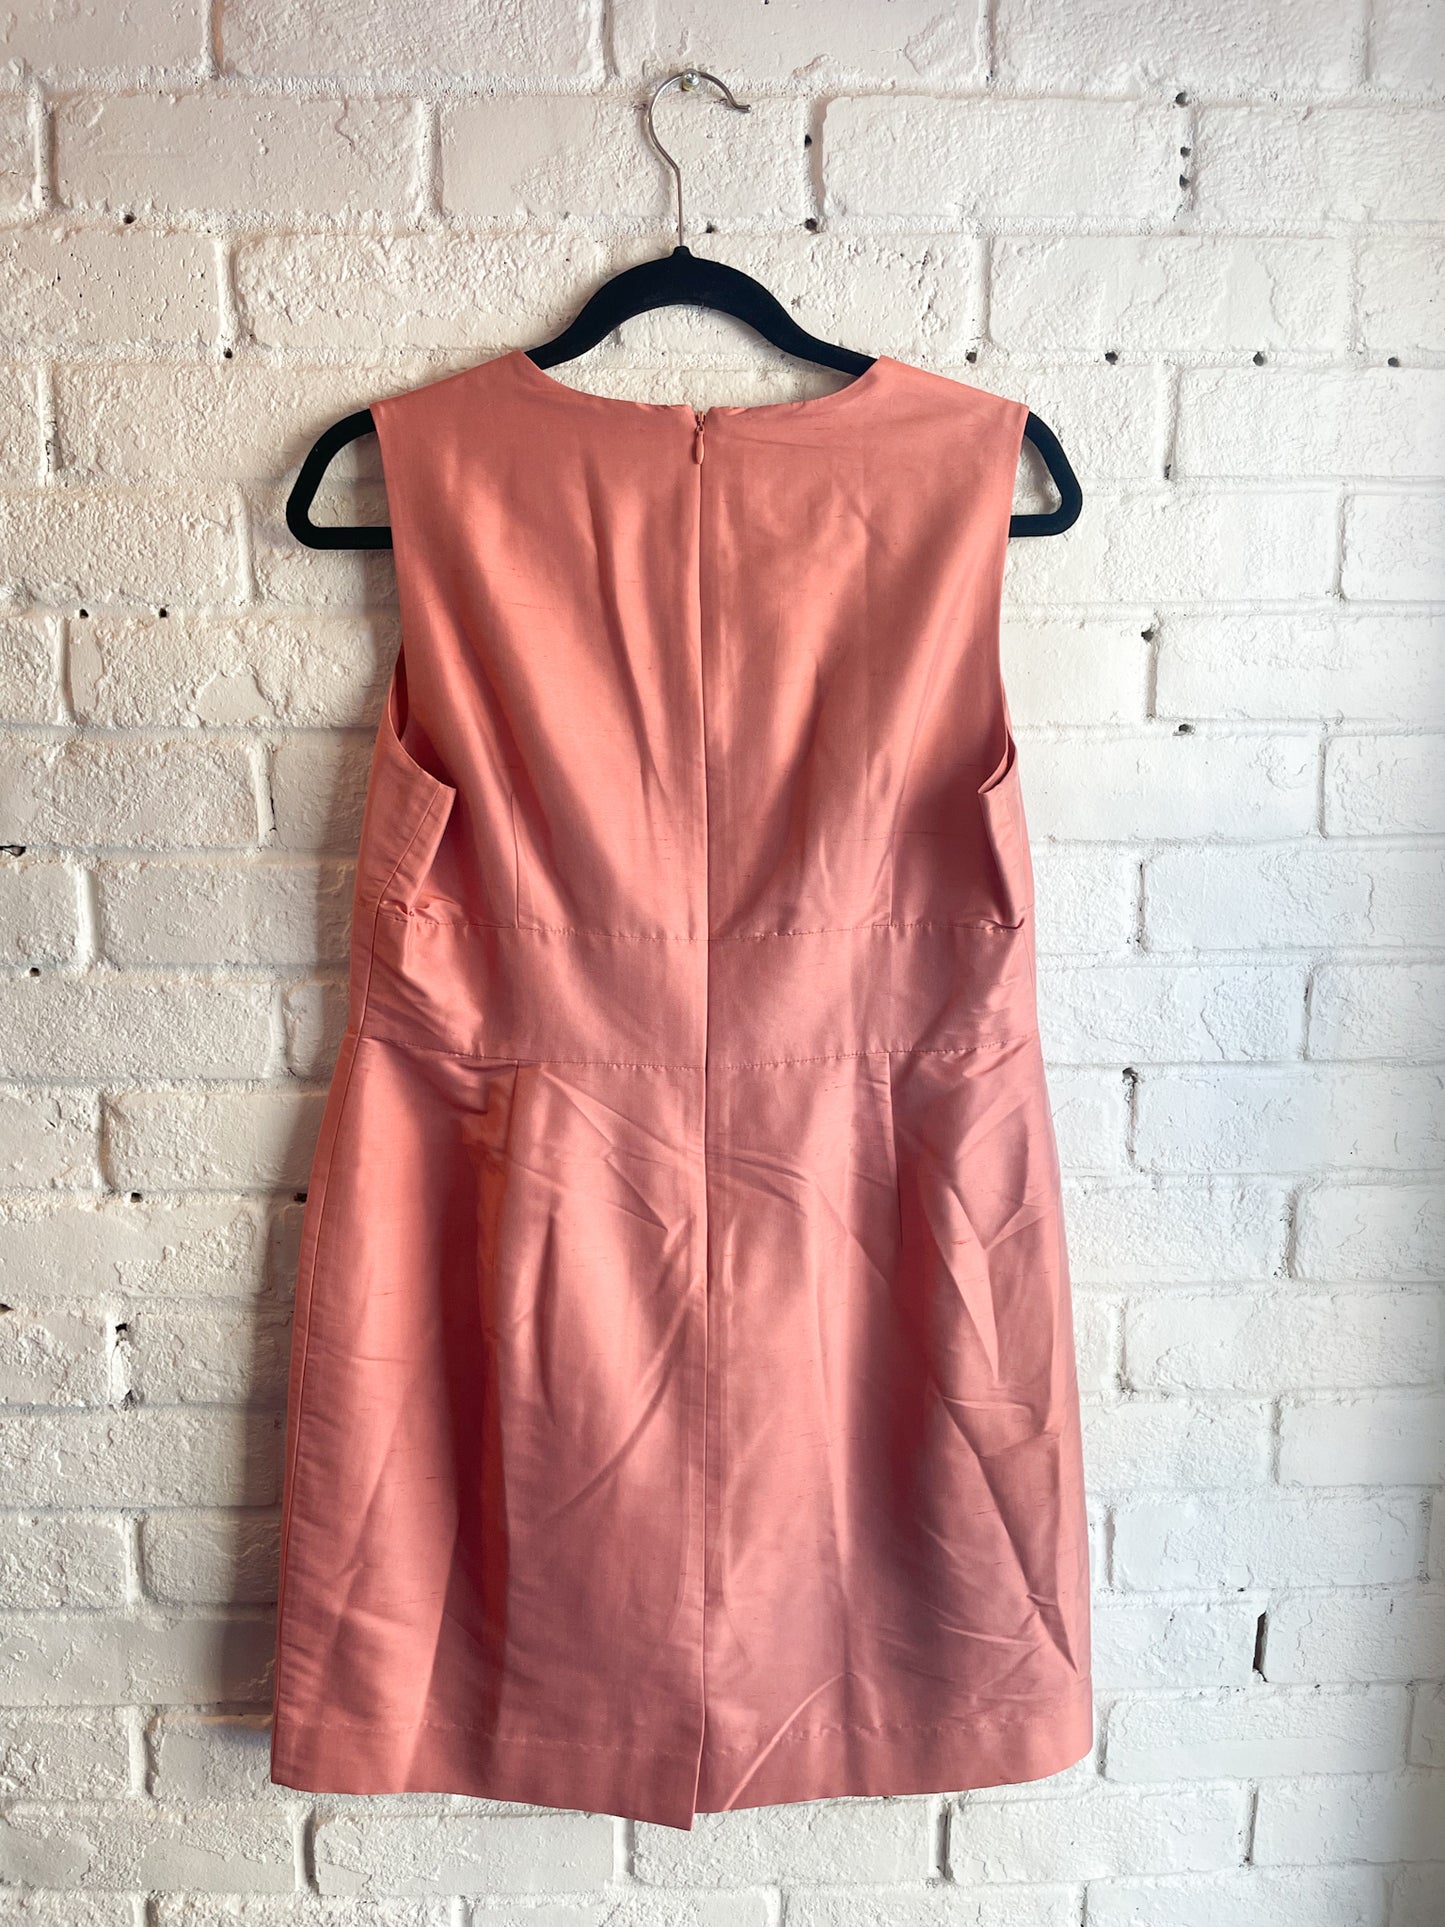 Talbots Salmon Pink 100% Silk Bow V-Neck Sheath Dress - Size 12